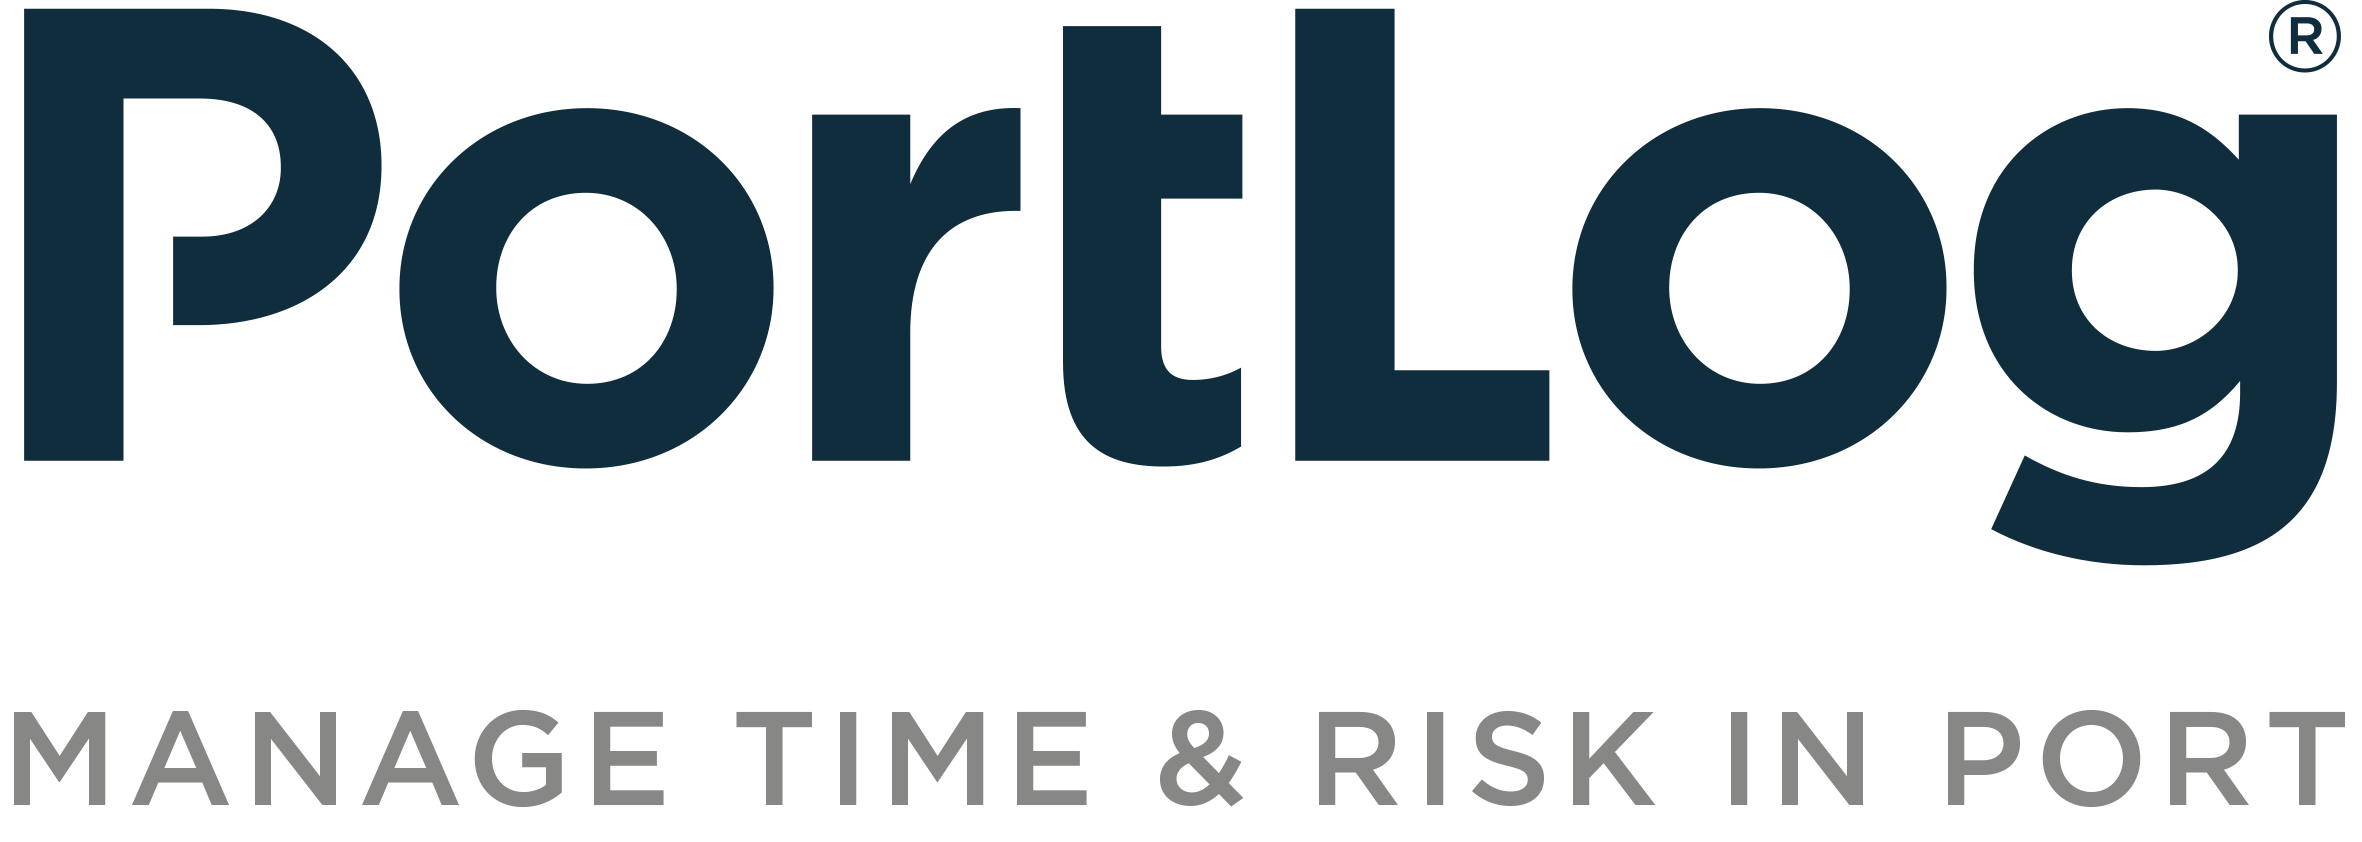 The PortLog logo "PortLog Manage time & risk in port" on a white backround